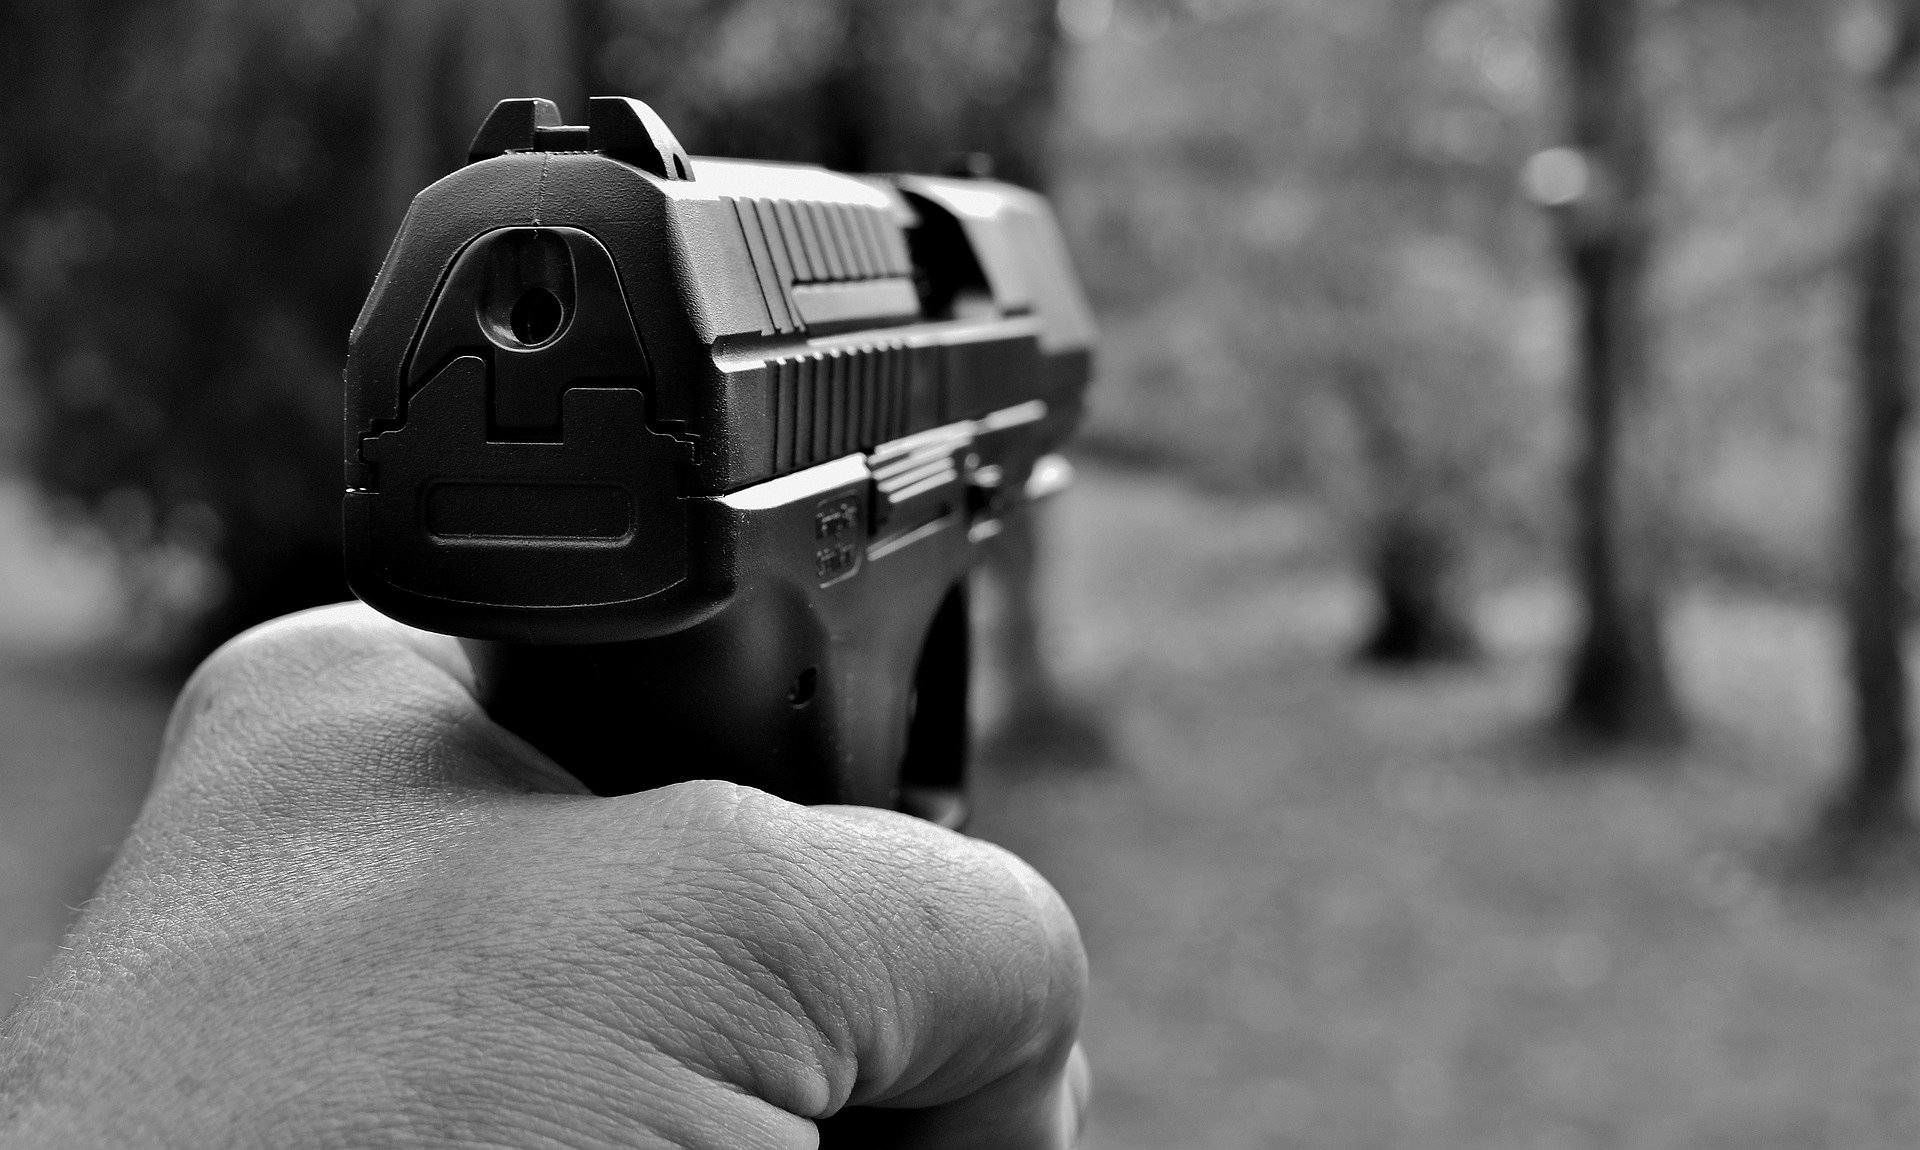 Pictured - A man pointing a handgun | Source: Pixabay